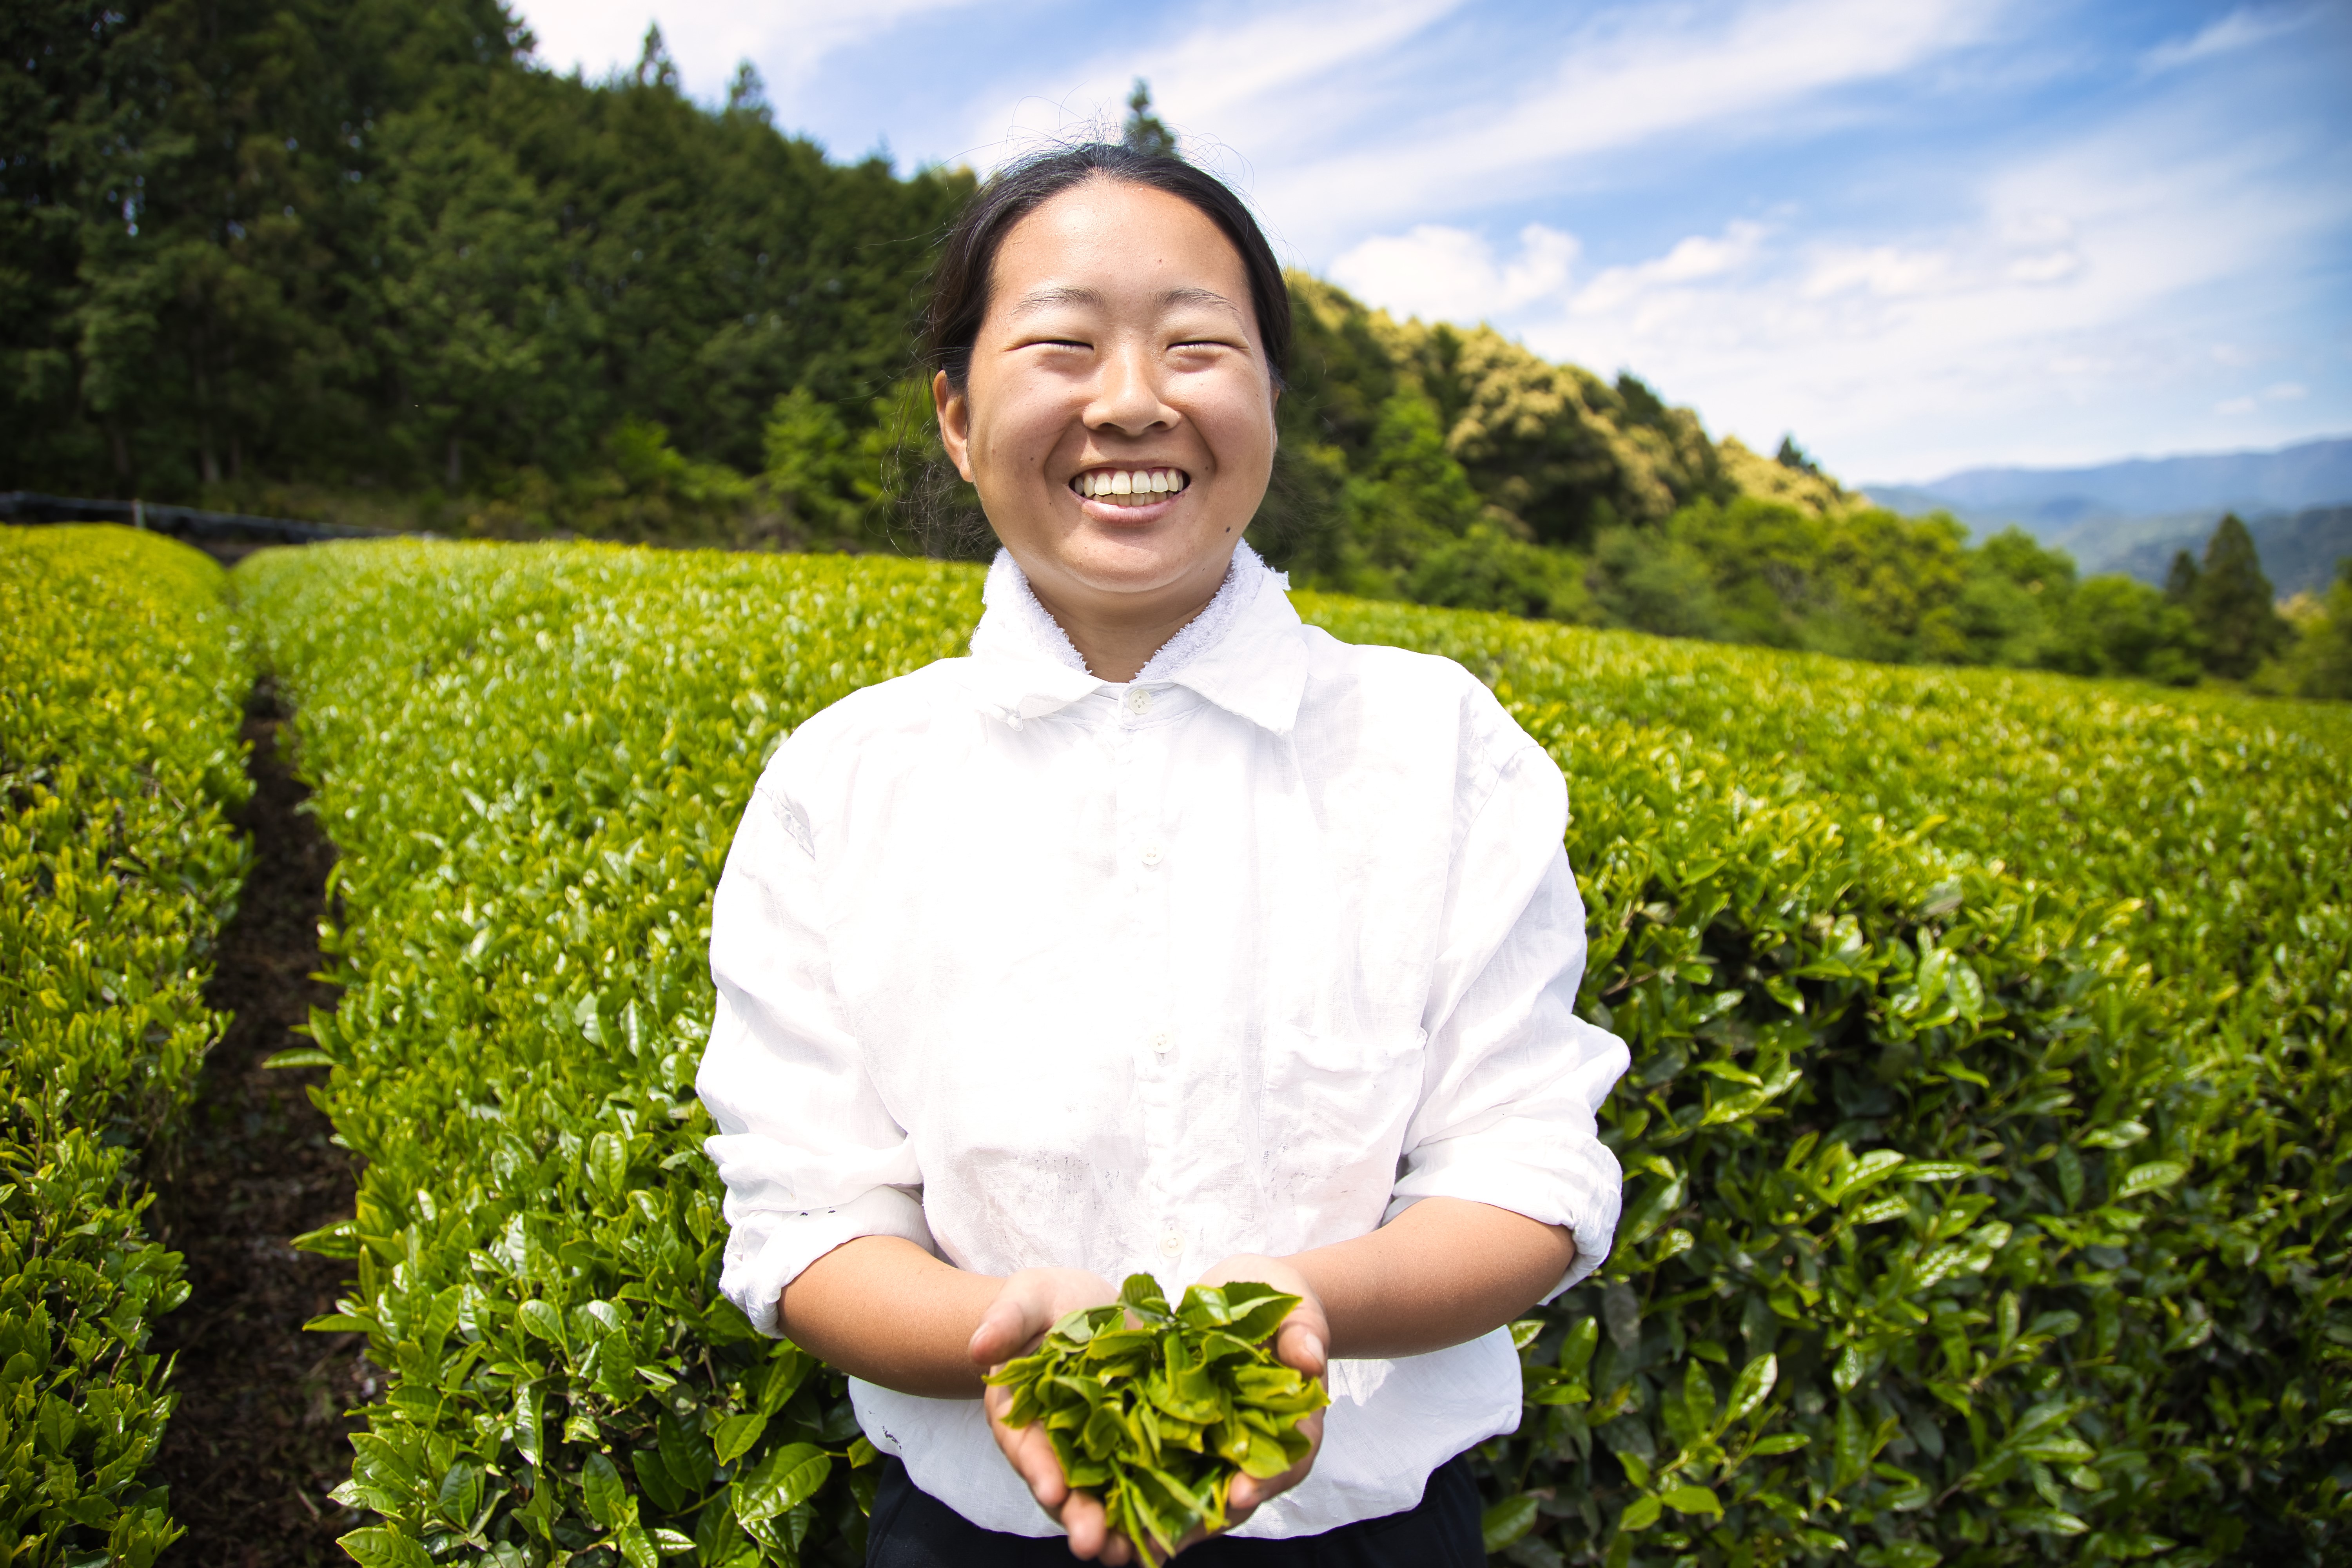 Visit Nacchan's Tea Plantation Farm with local tour guide 'Hanako'